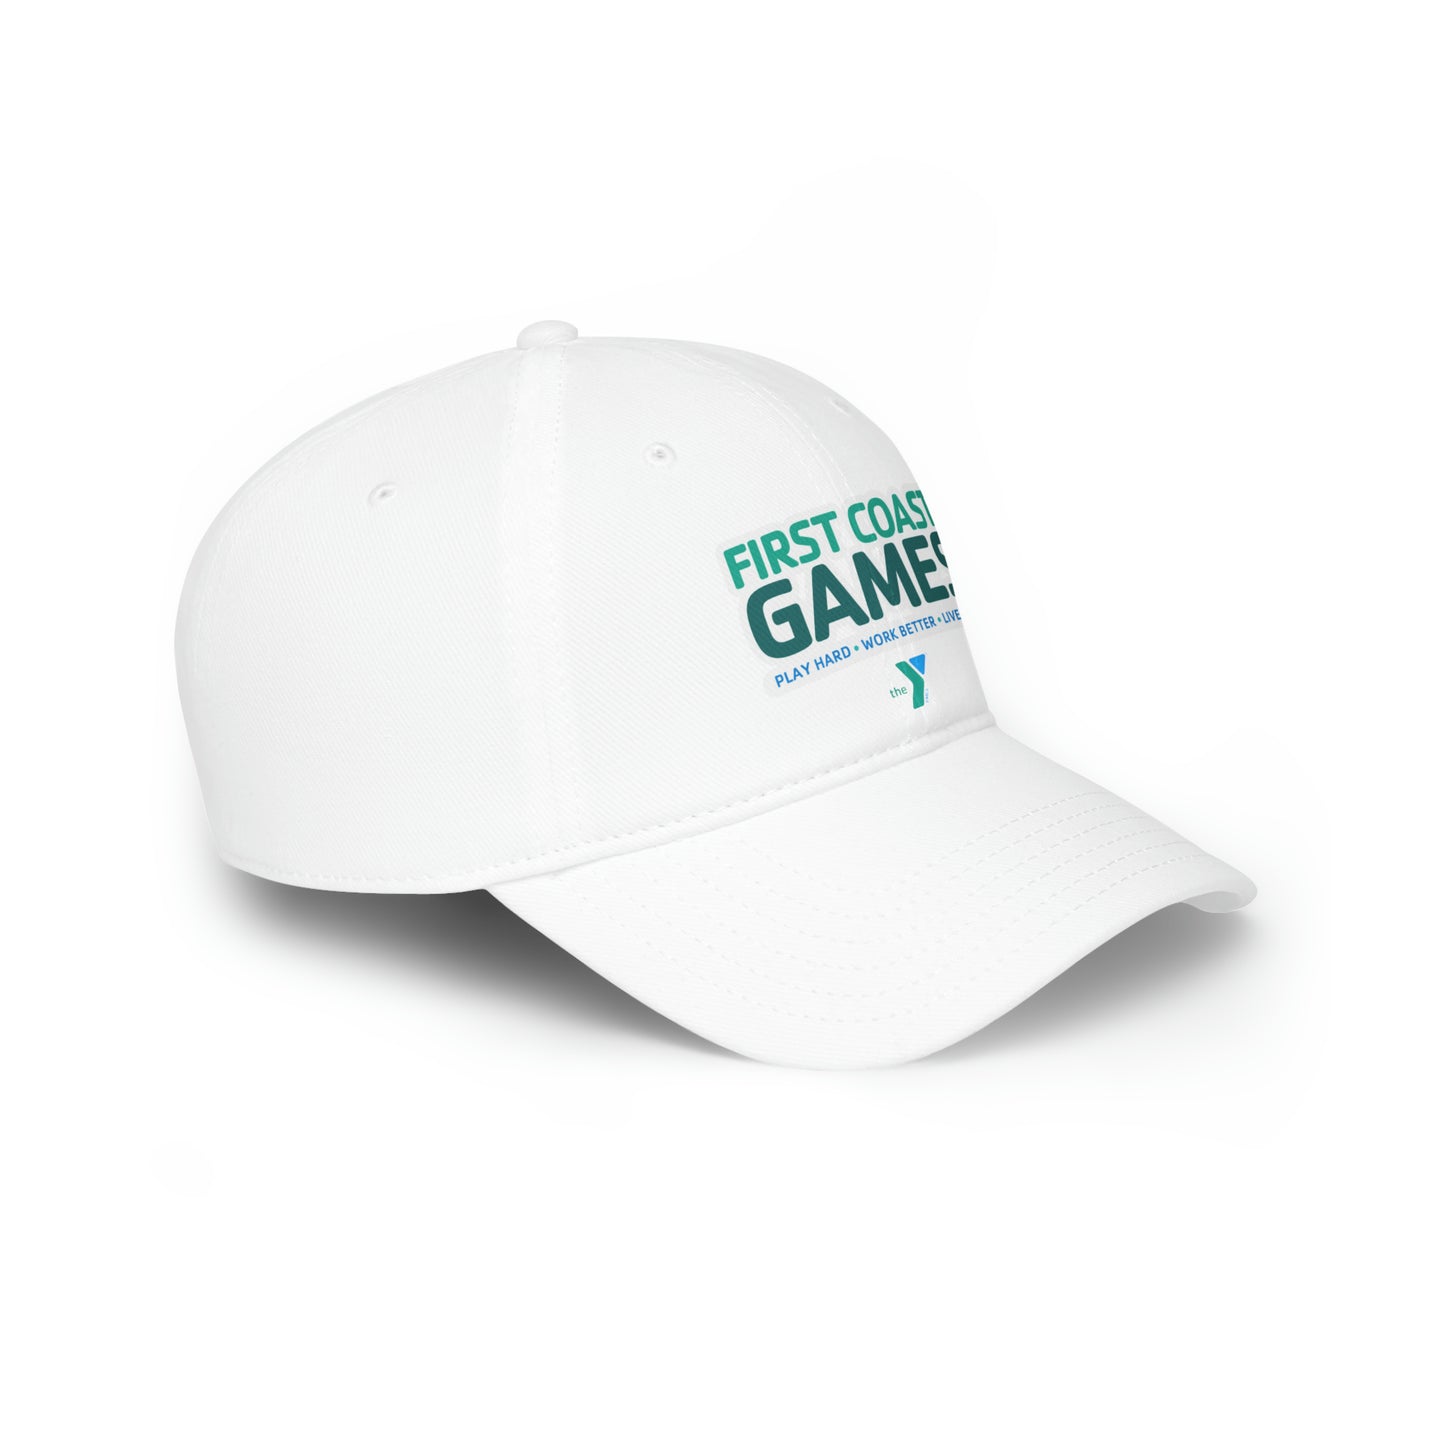 First Coast Games - Low Profile Baseball Cap